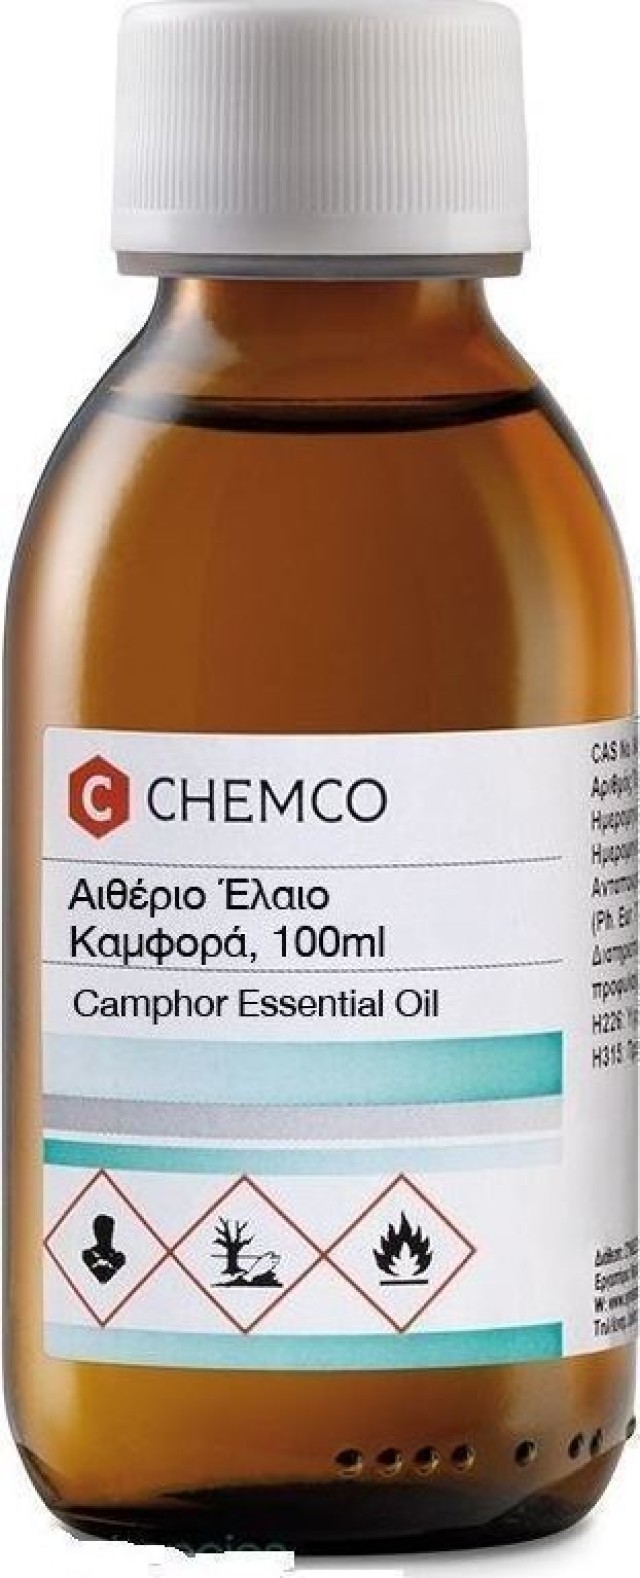 Chemco Camphor Essential Oil 100ml